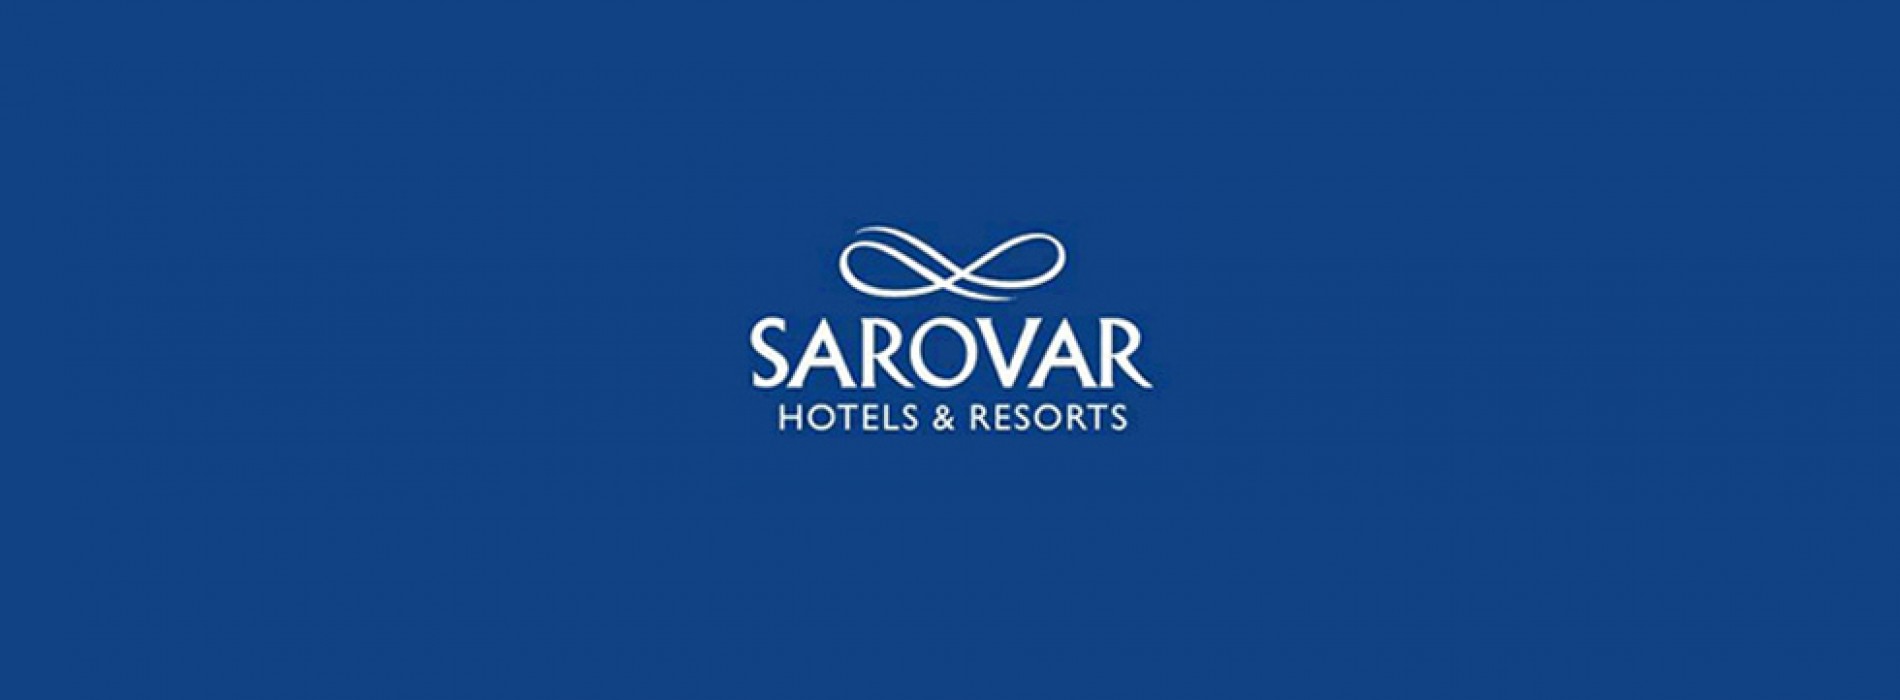 Sarovar Hotels extends its footprint in Gujarat; opens Efcee Sarovar Portico in Bhavnagar